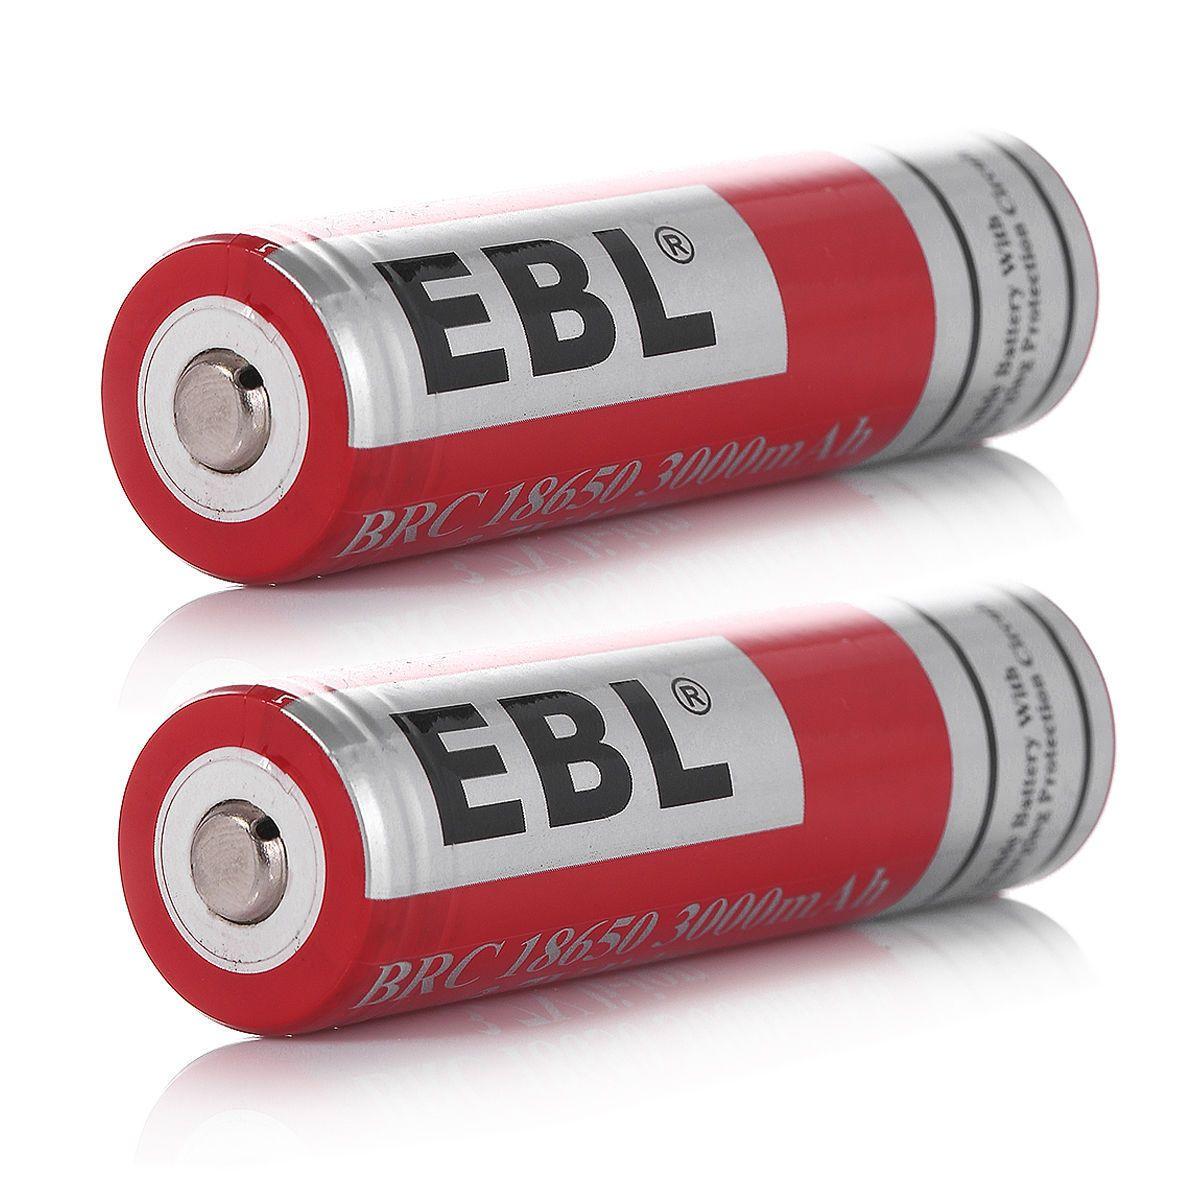 EBL 18650 Li-ion 3.7V Rechargeable 3000 mah, 2 Counts